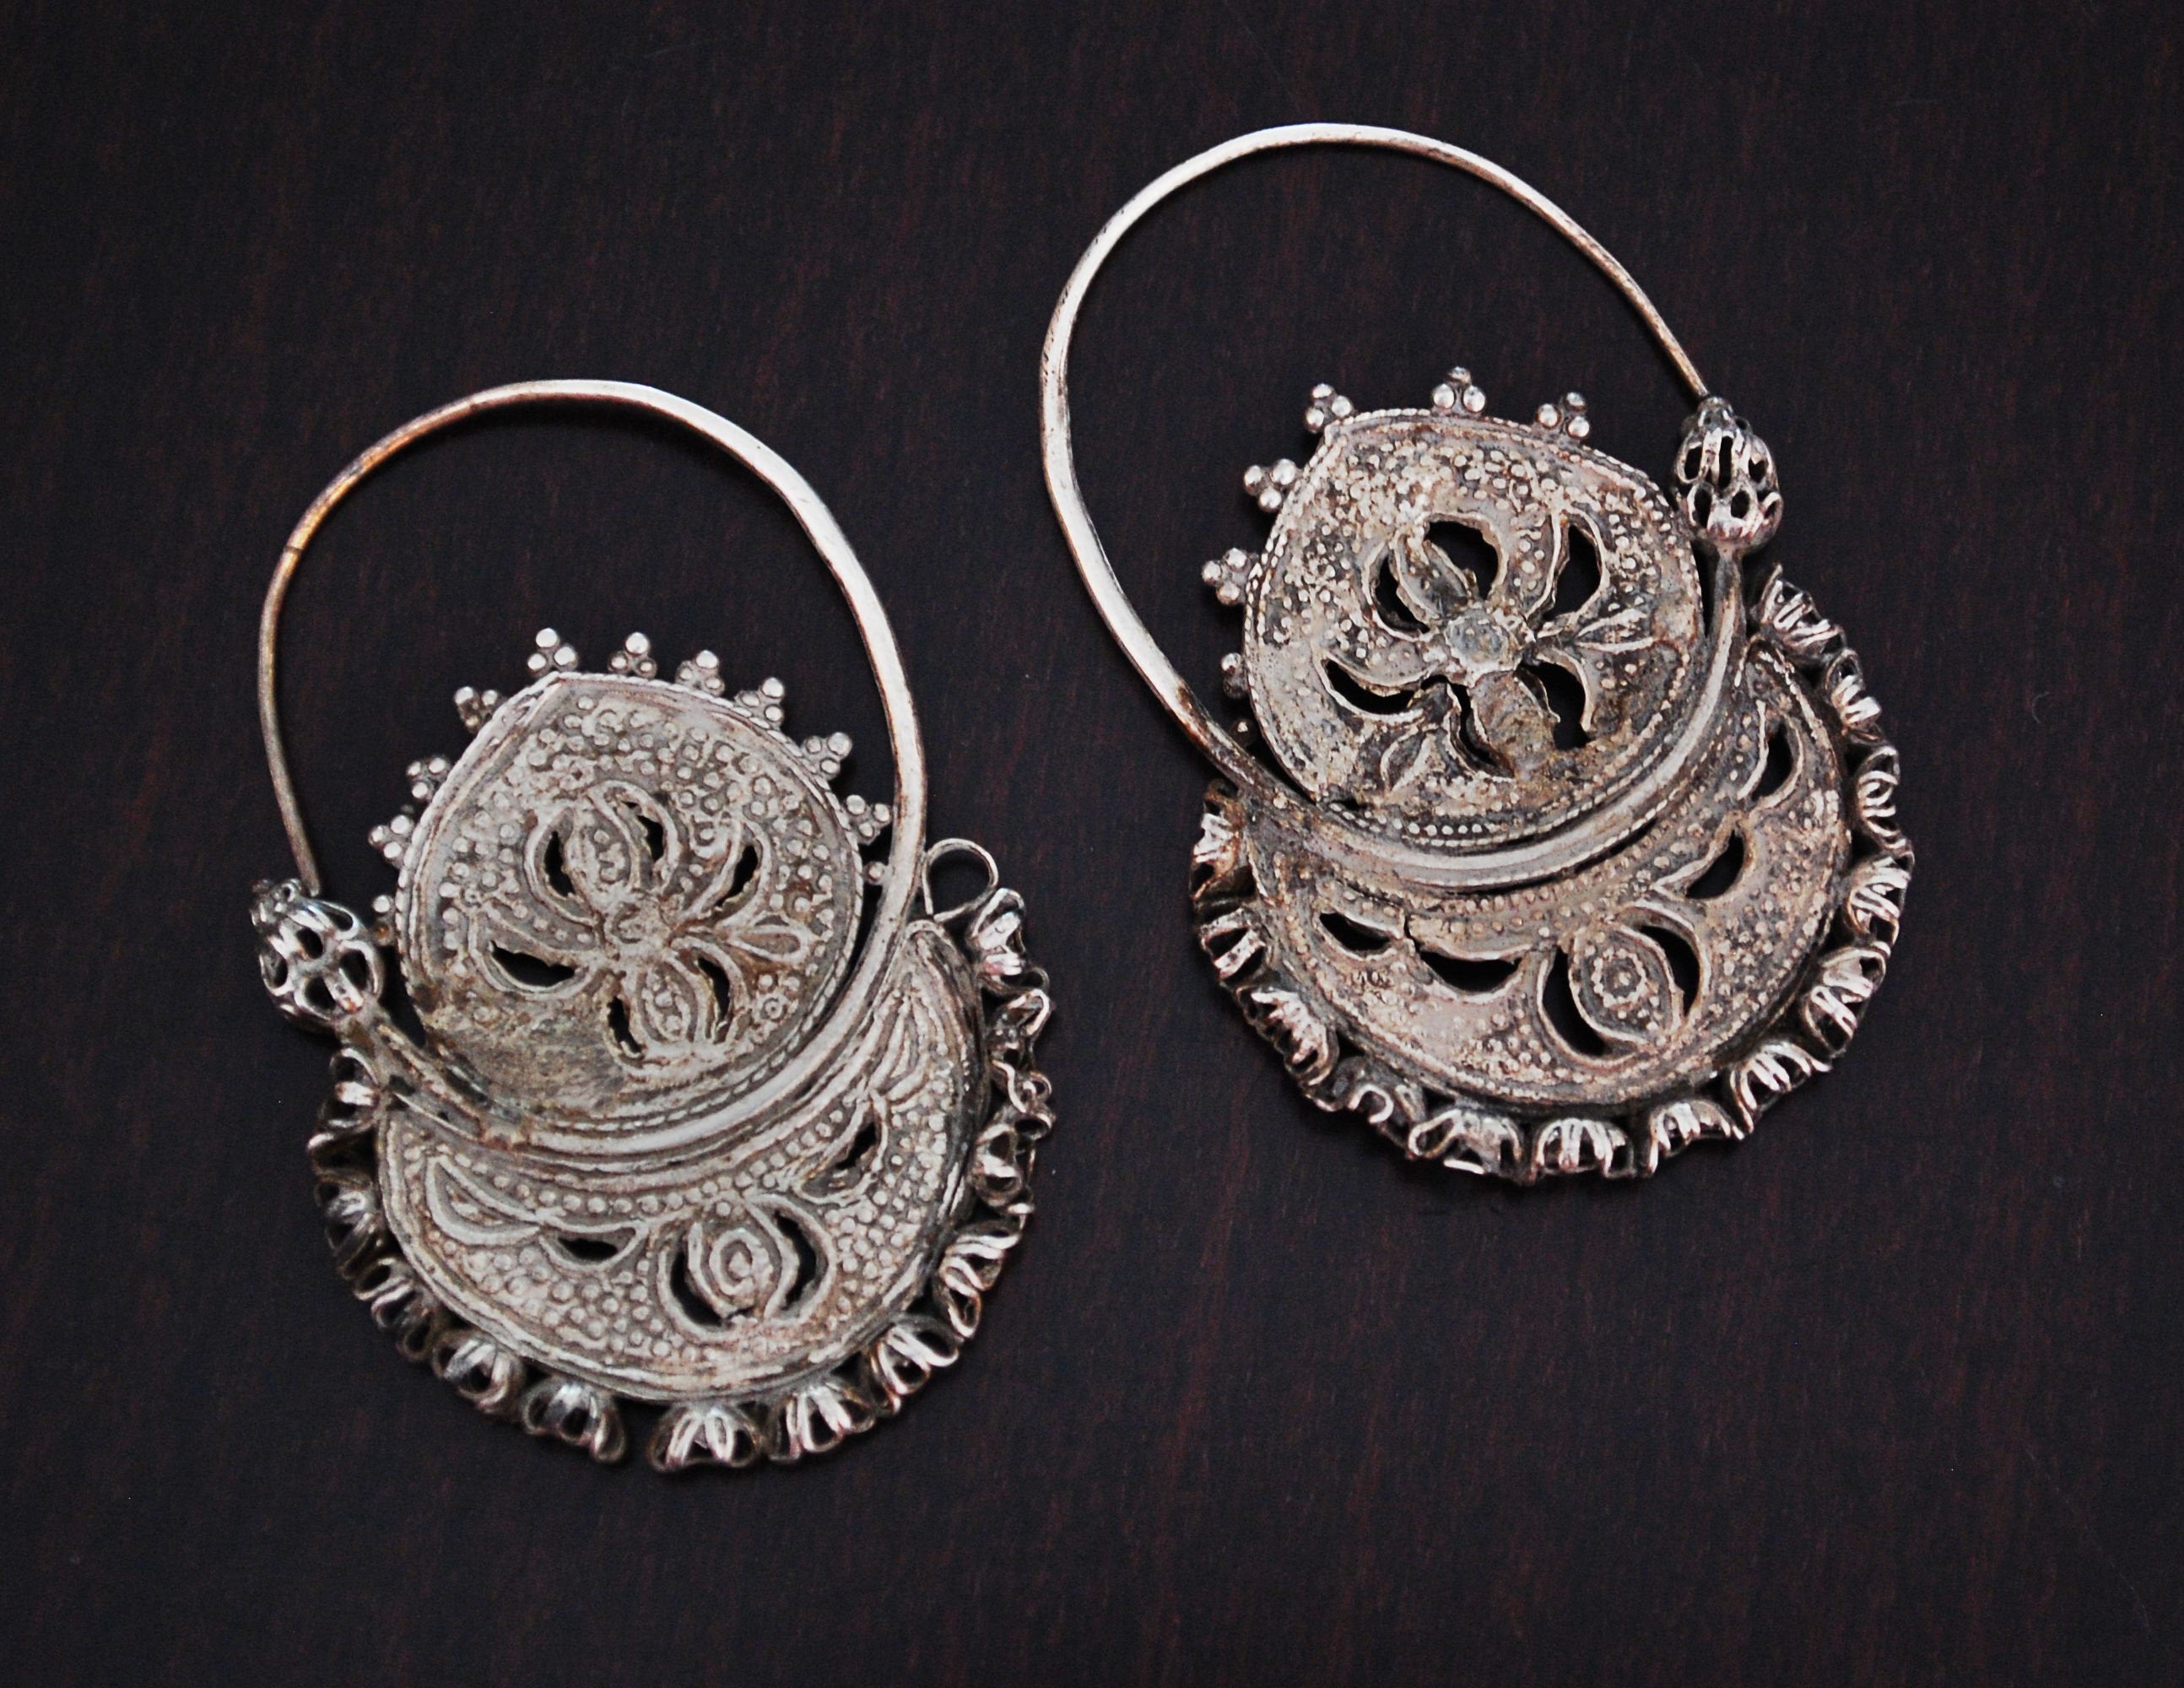 Antique Uyghur Earrings from China - Xinjiang - Tribal Earrings - Afghani Earrings - Afghani Jewelry - Afghan Earrings